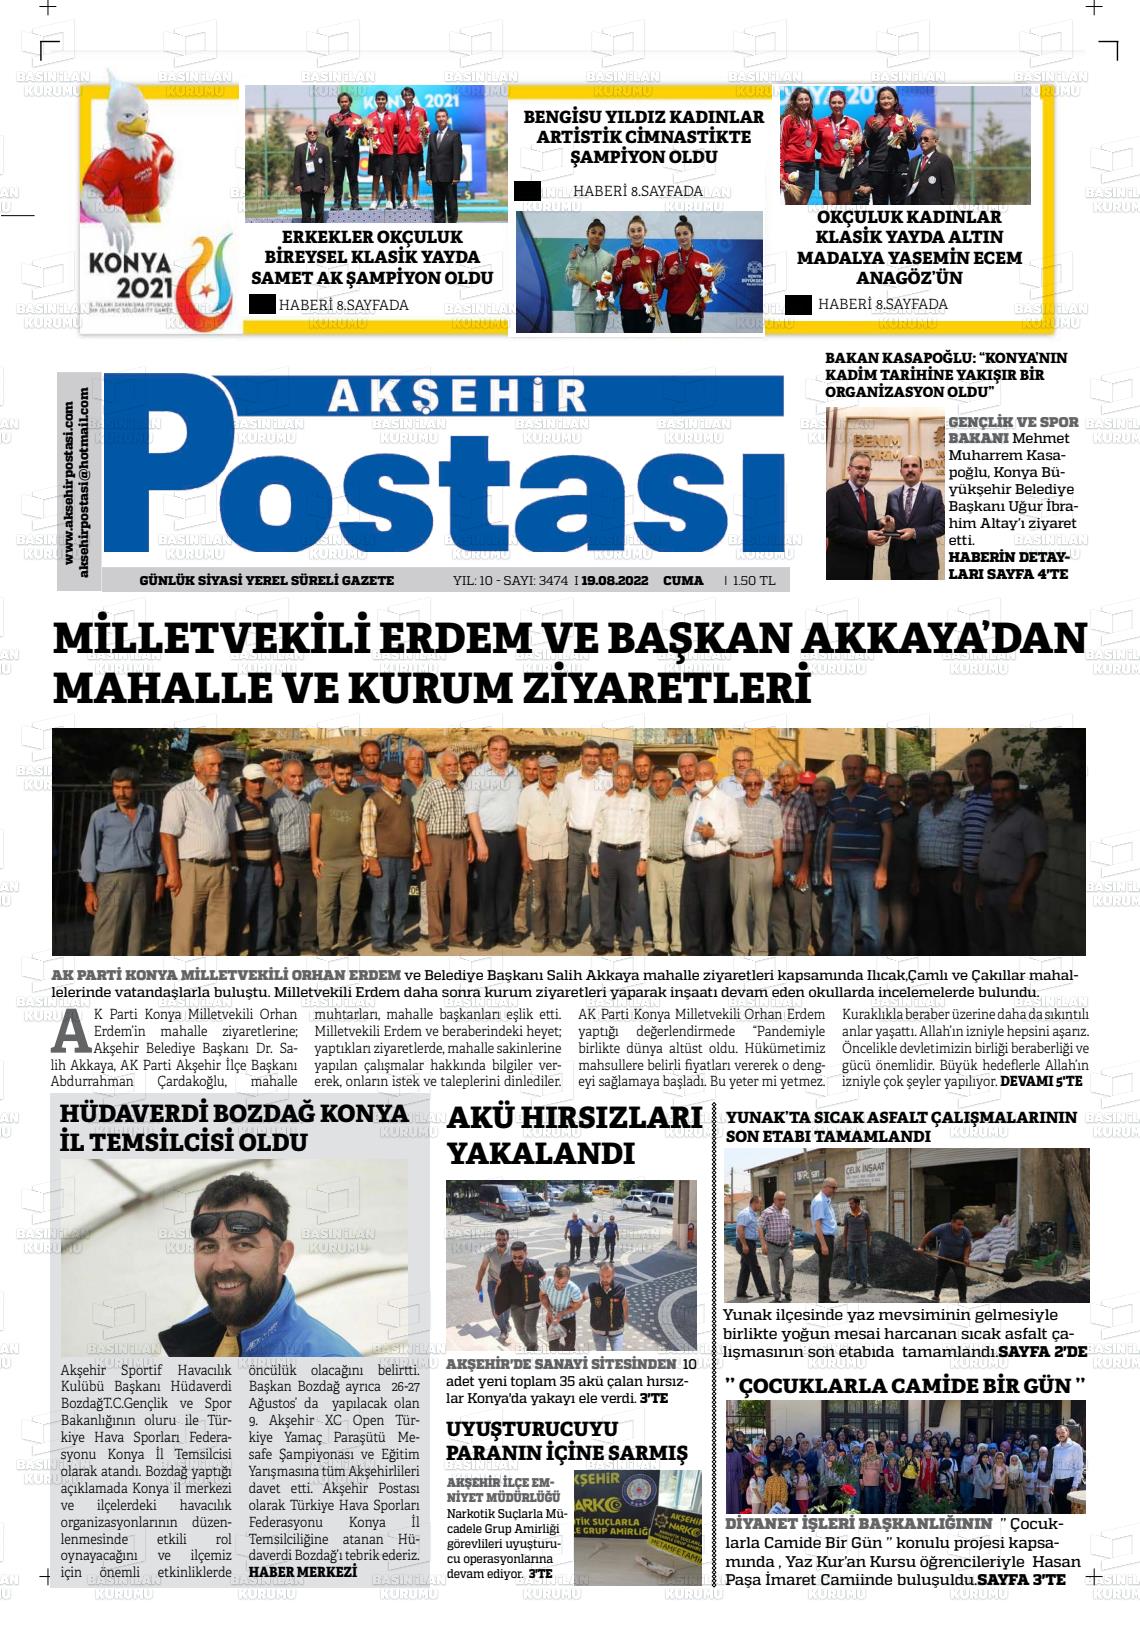 19 Ağustos 2022 Akşehir Postasi Gazete Manşeti